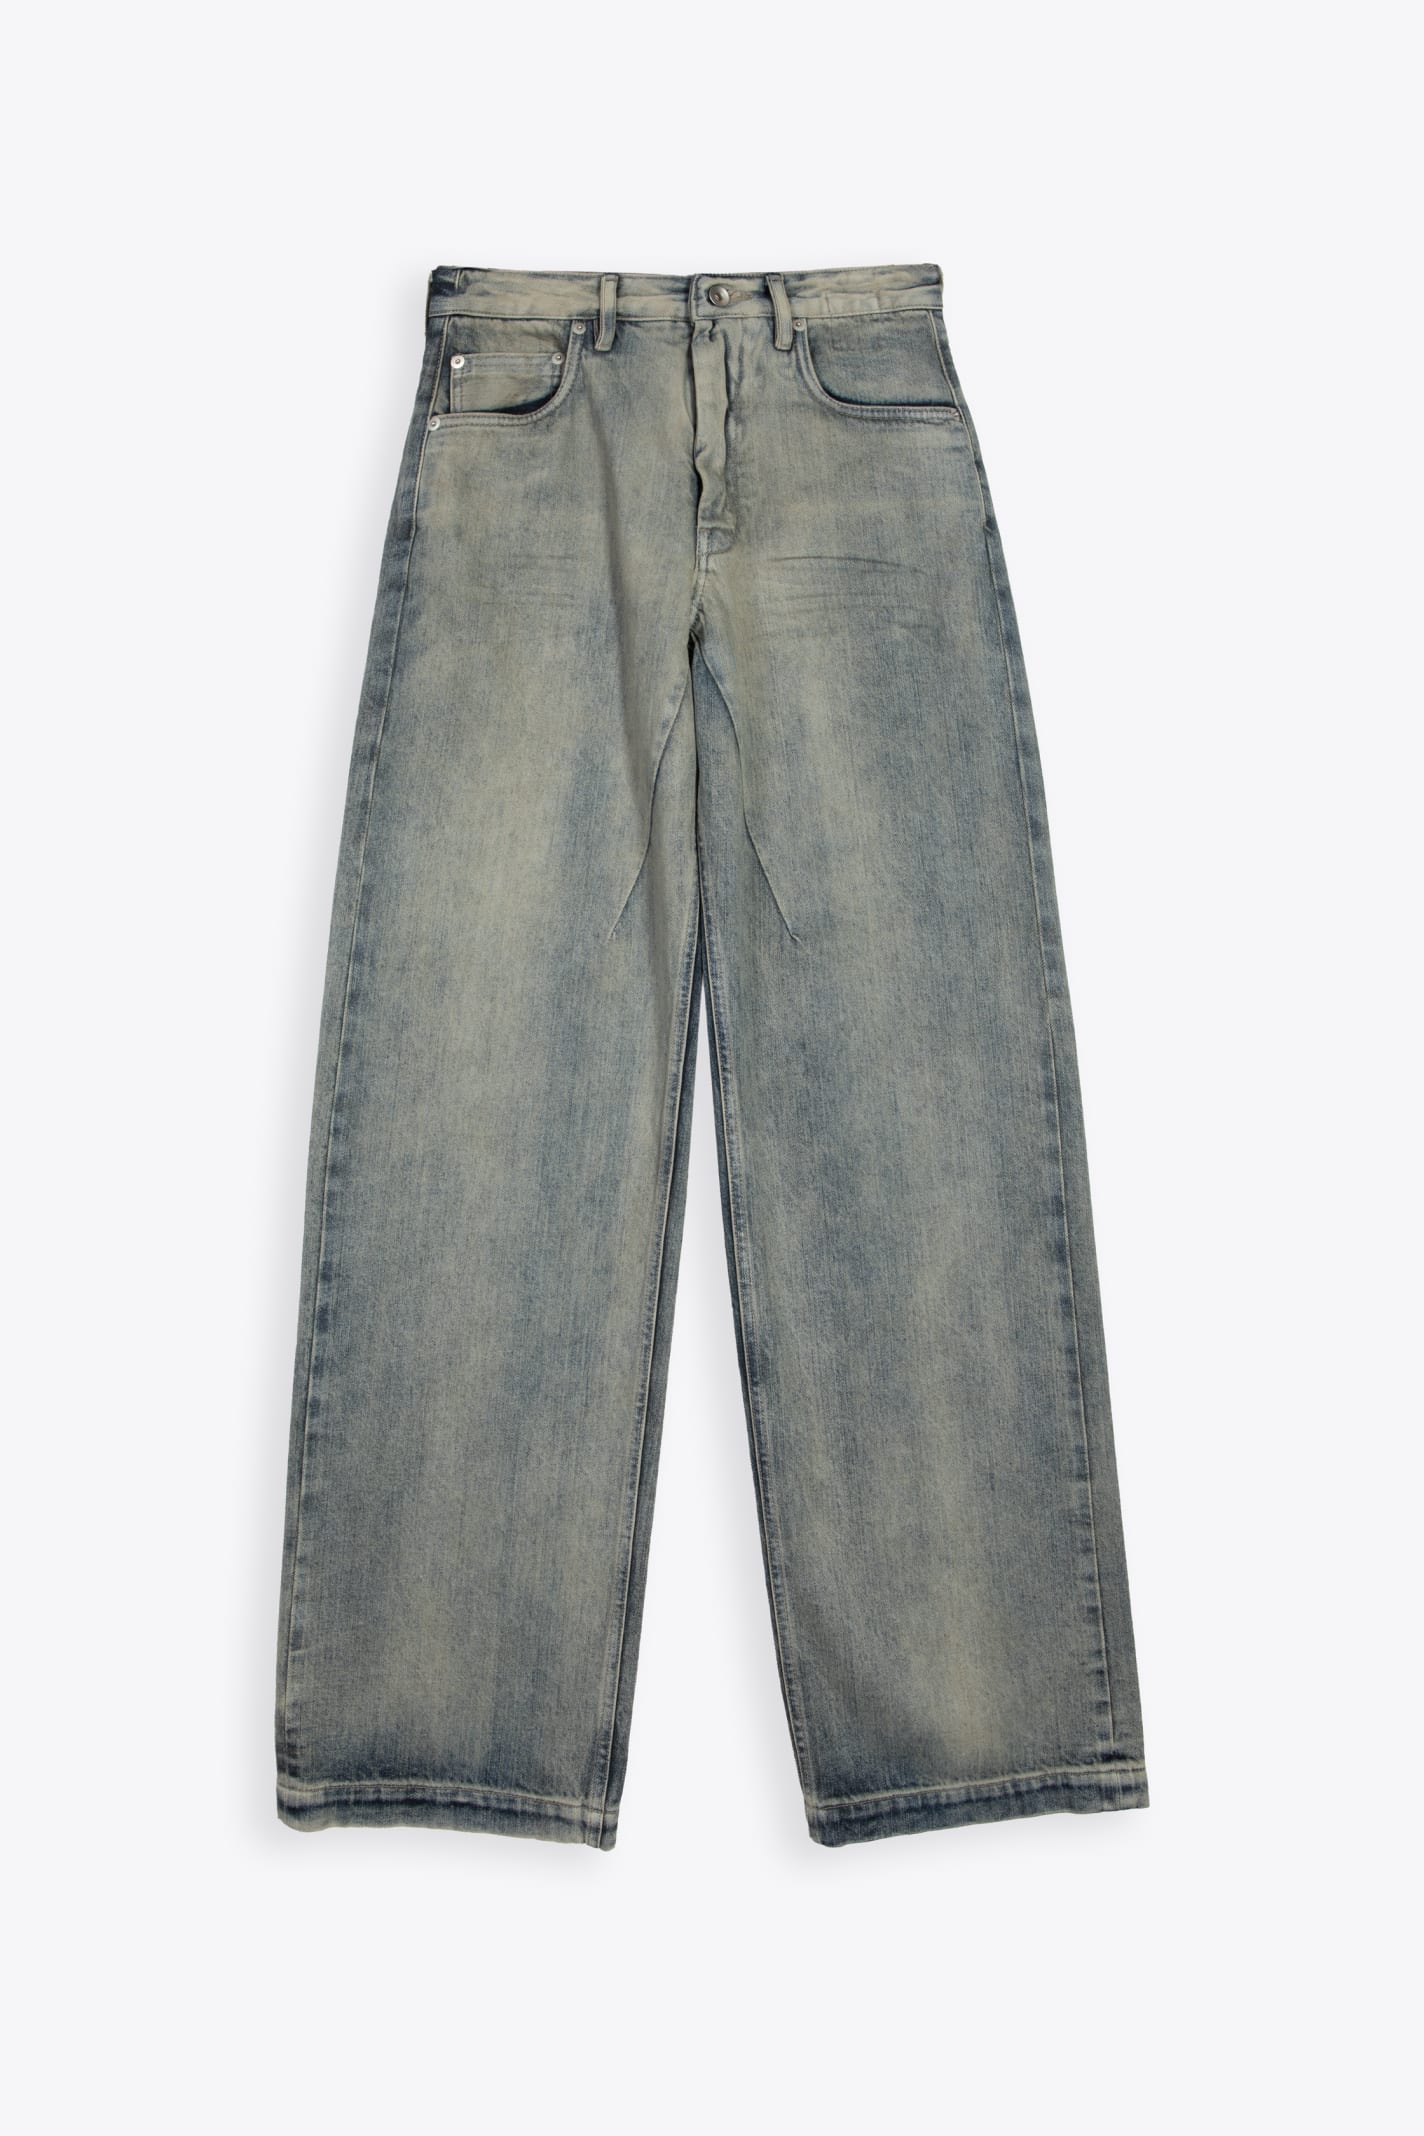 Shop Drkshdw Geth Jeans Sandblasted Mid Blue Denim Baggy Pant - Geth Jeans